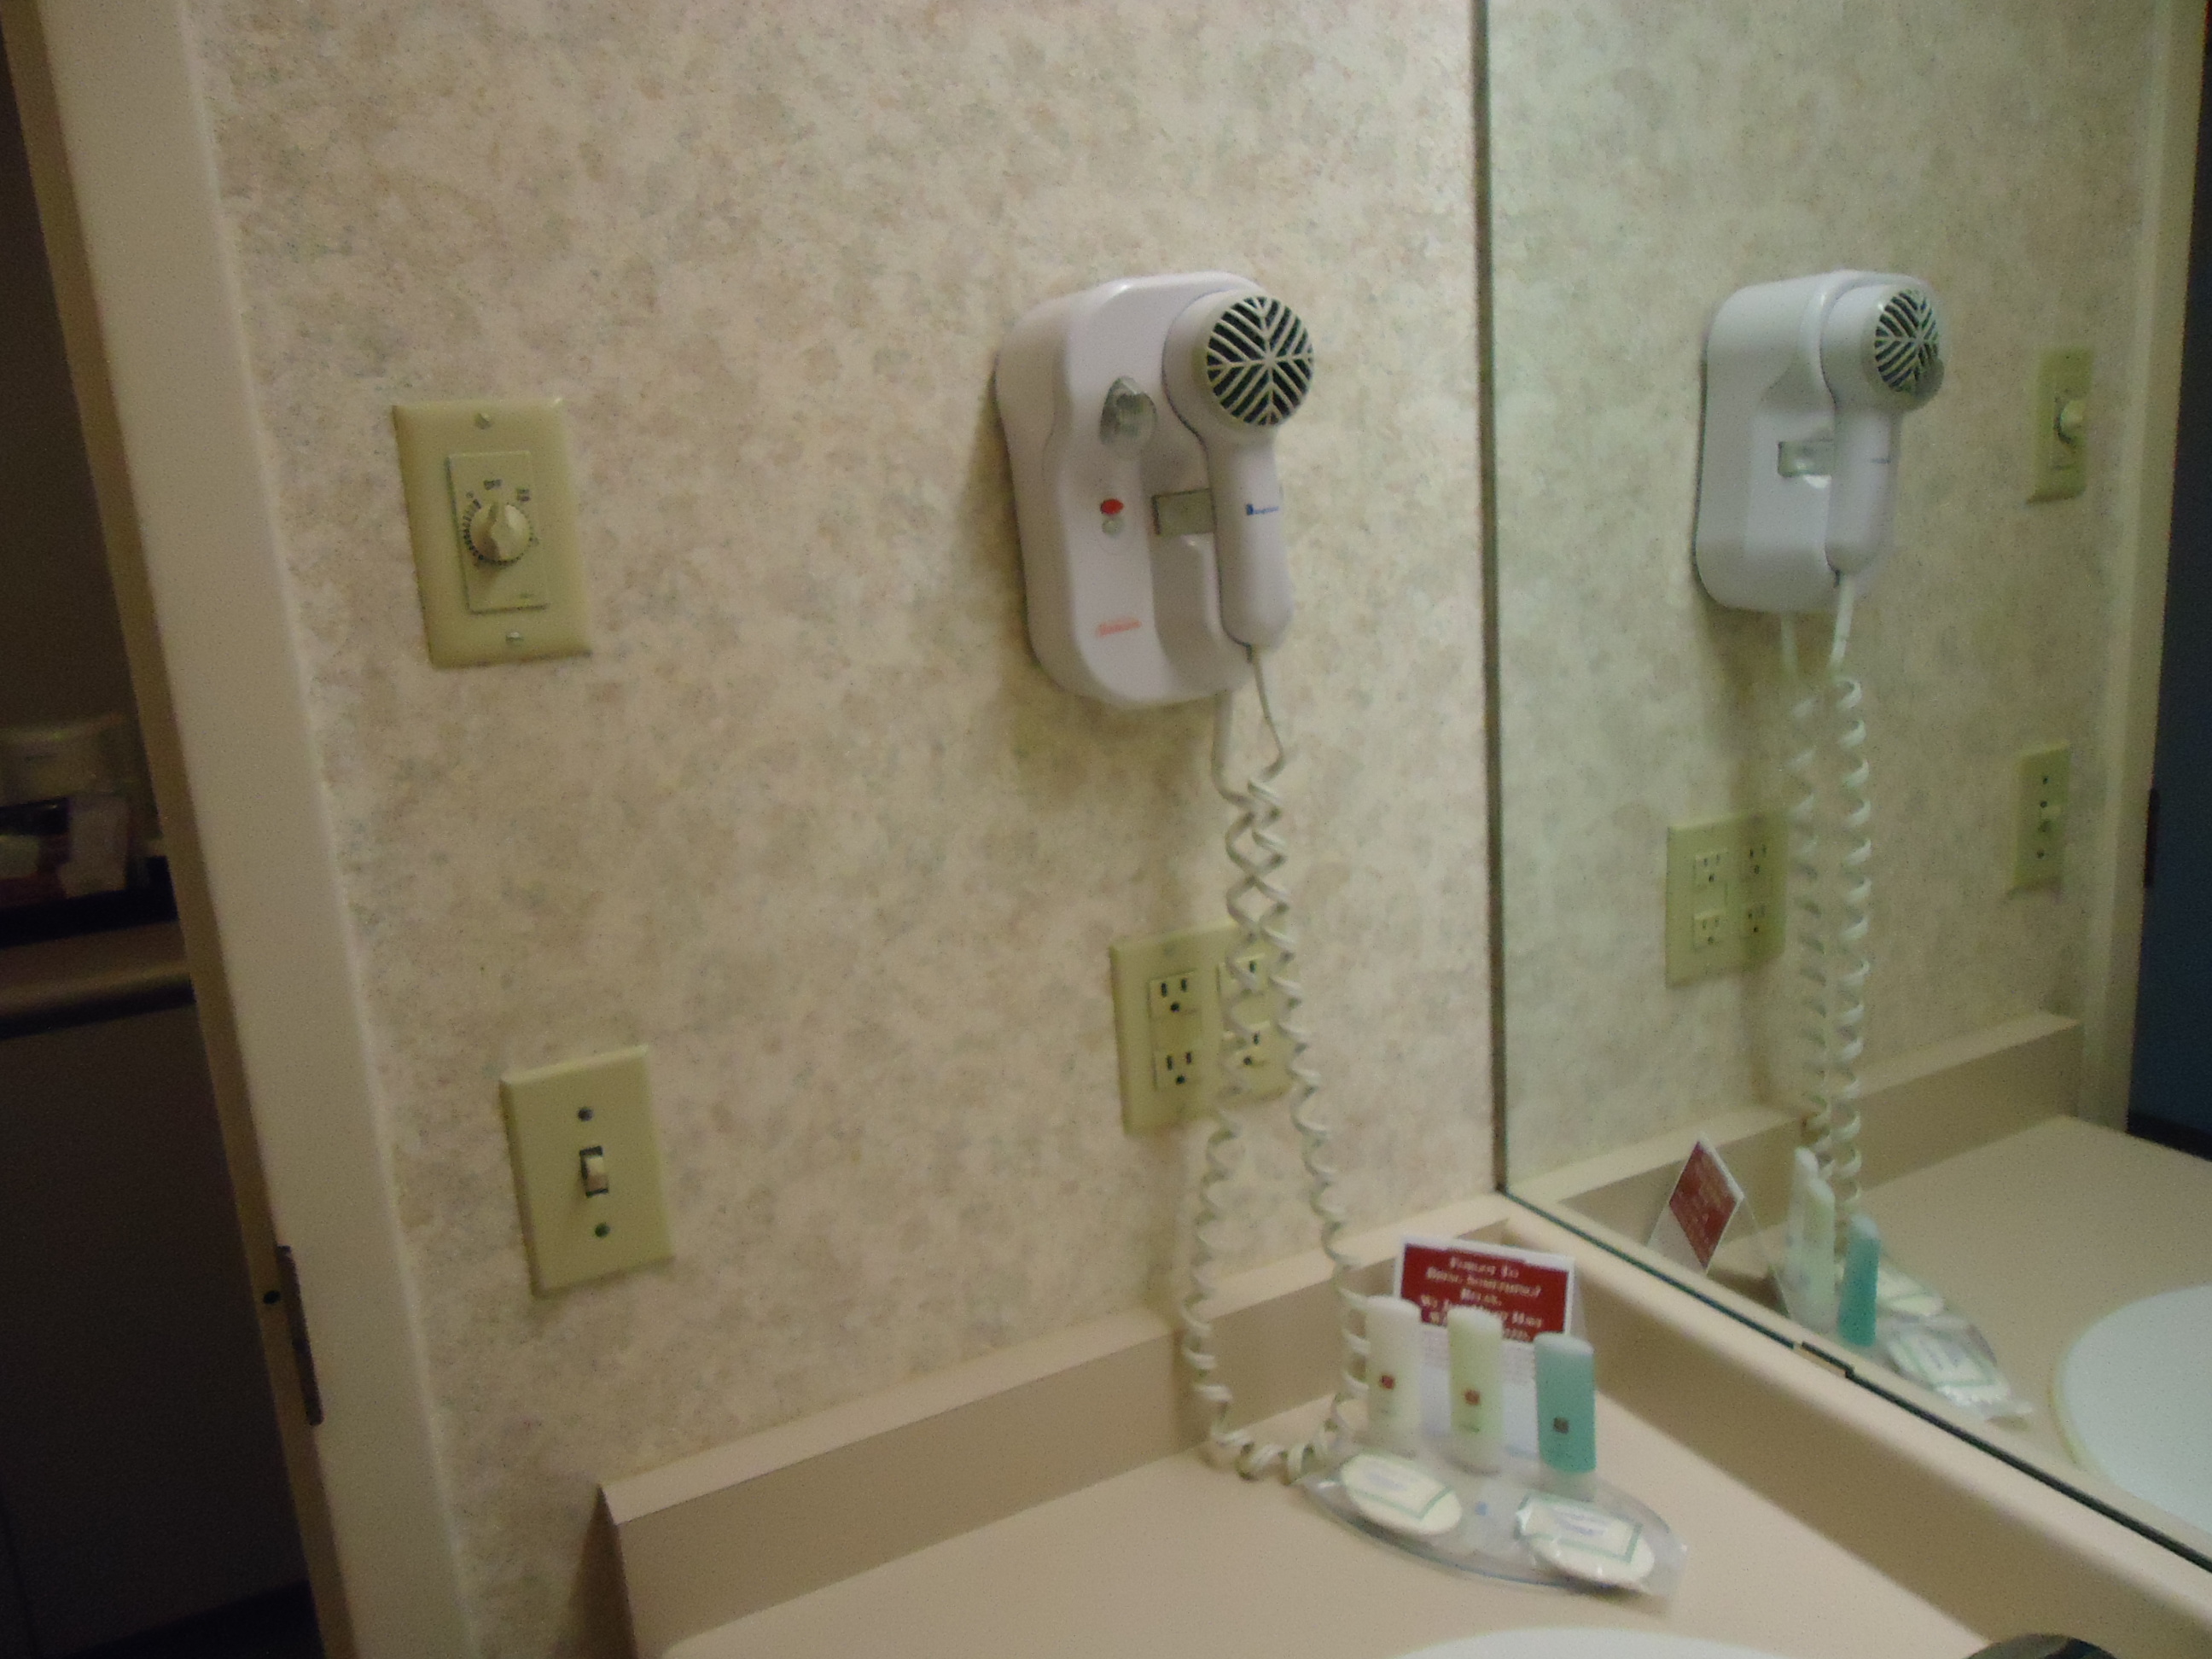 Bathroom toiletries towels 4 glasses rm 461 clarion hotel 